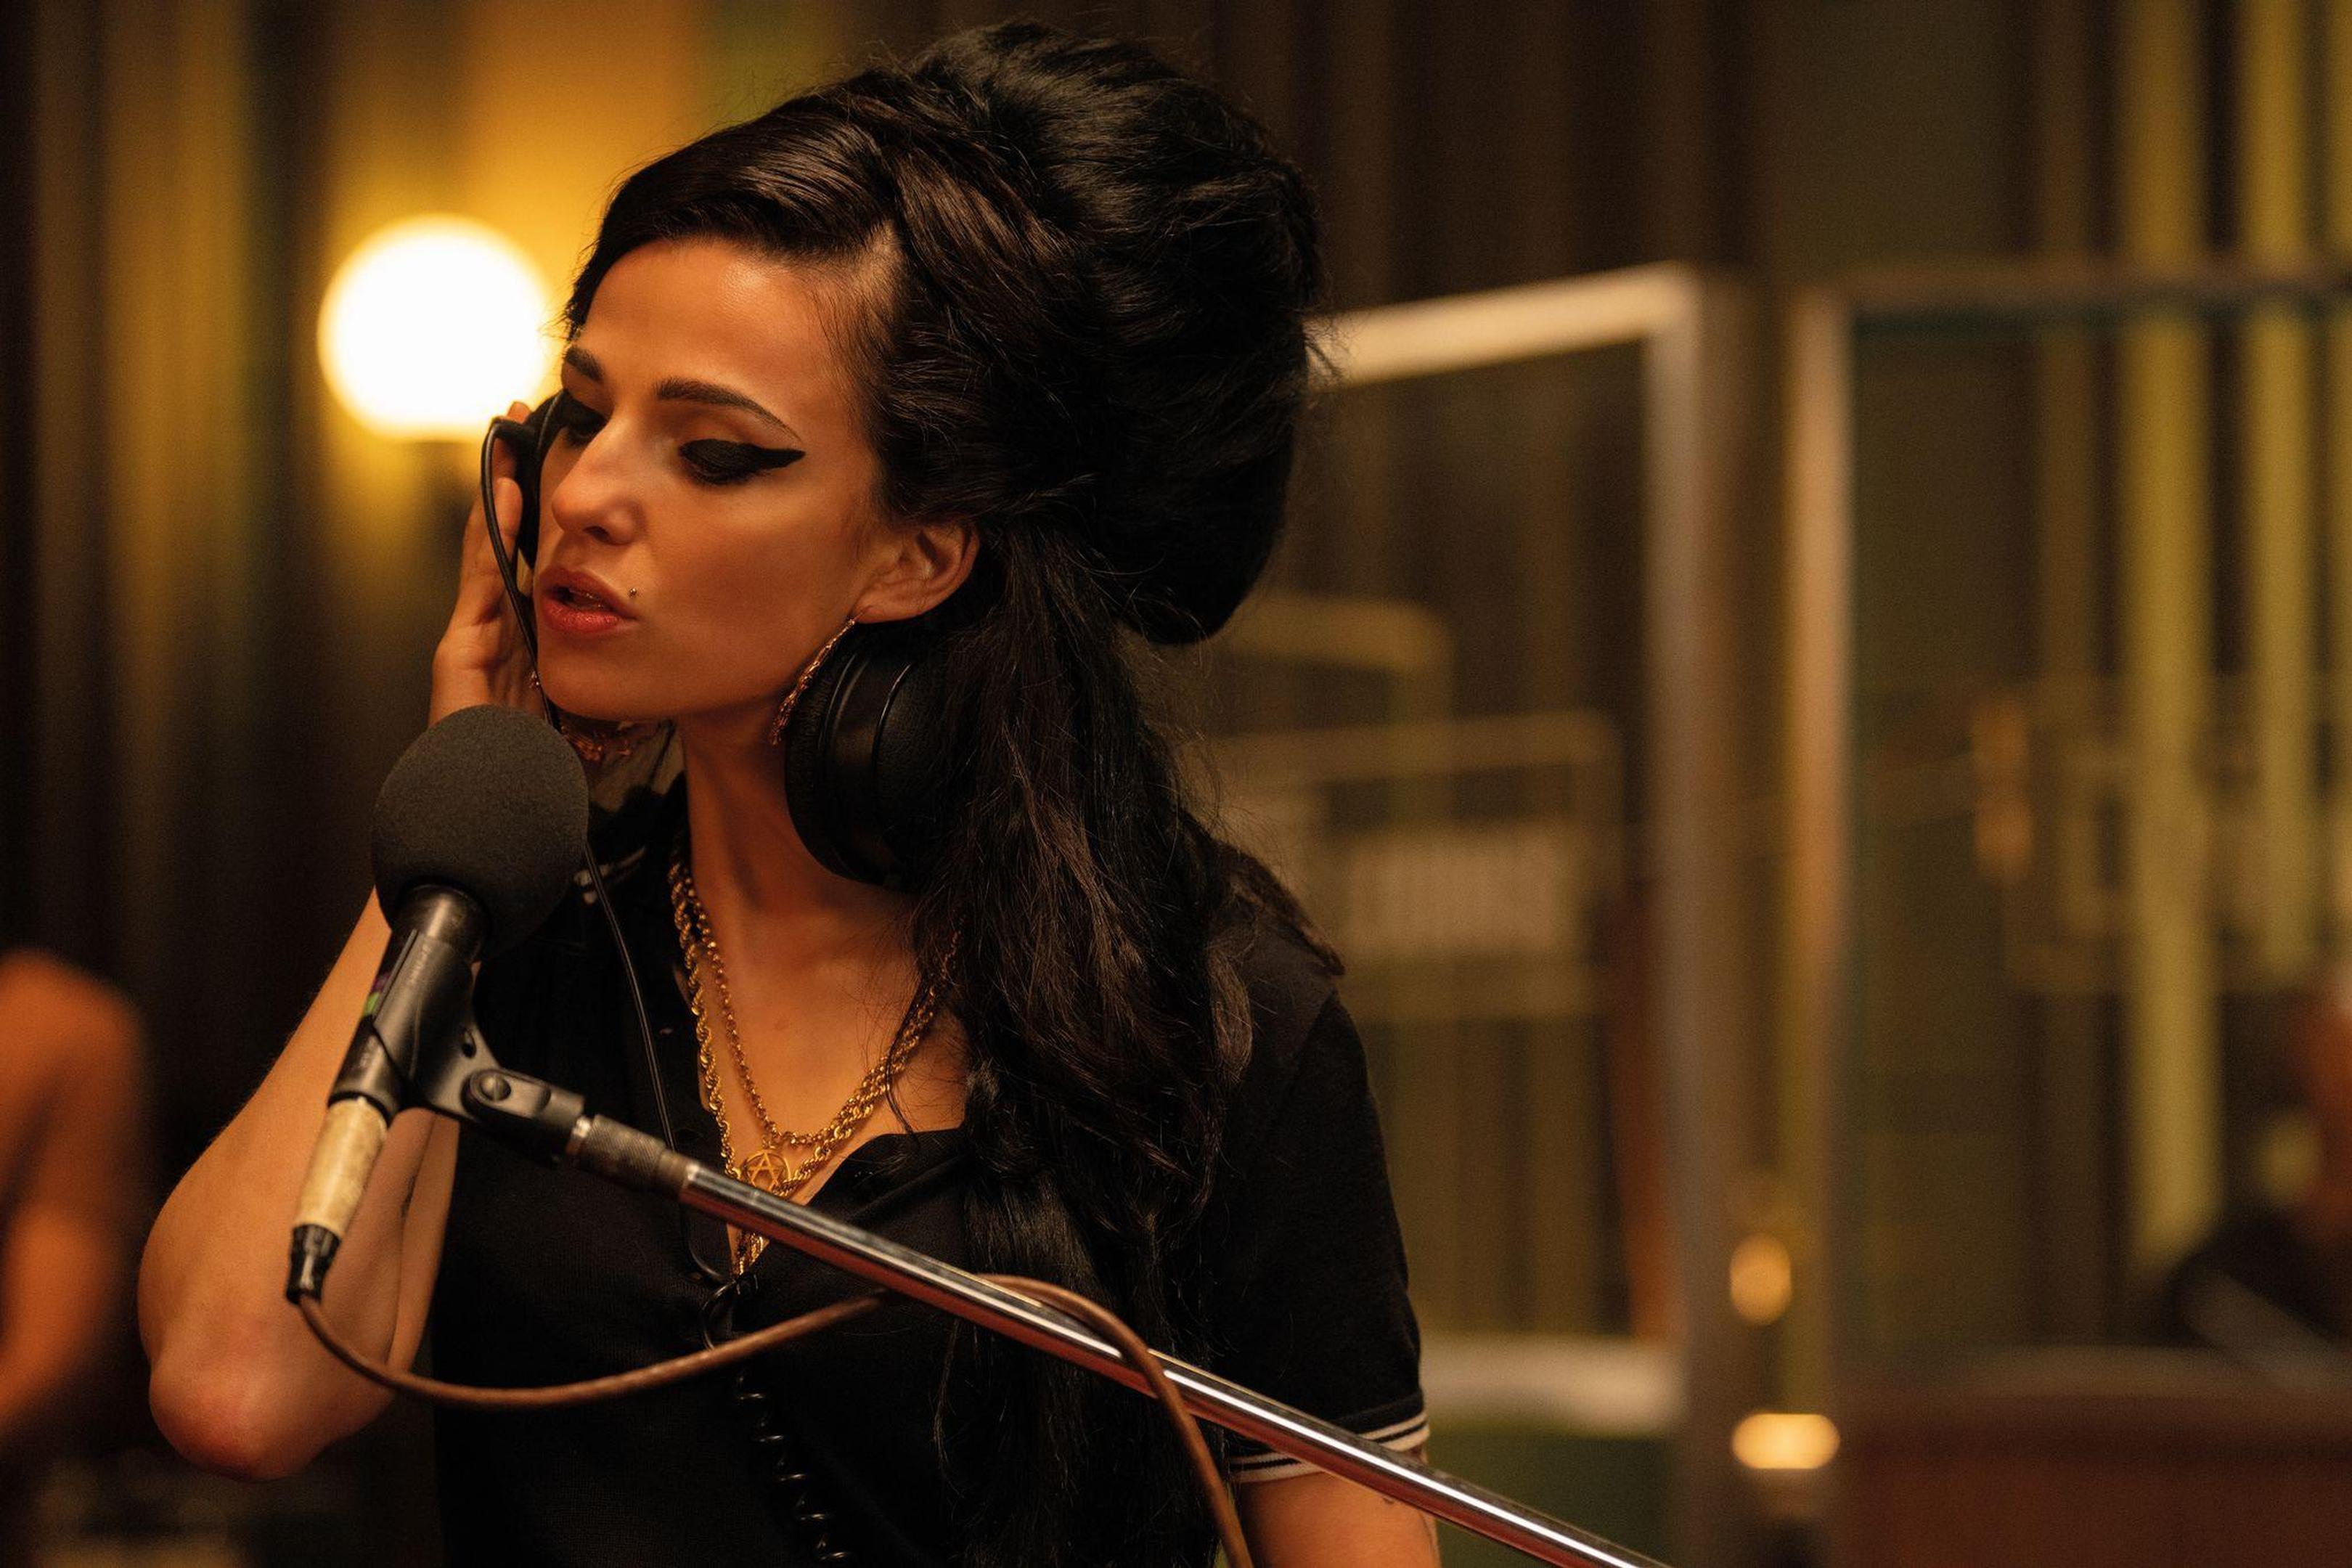 Marisa Abela als Amy Winehouse in einer Szene des Films „Back to Black".